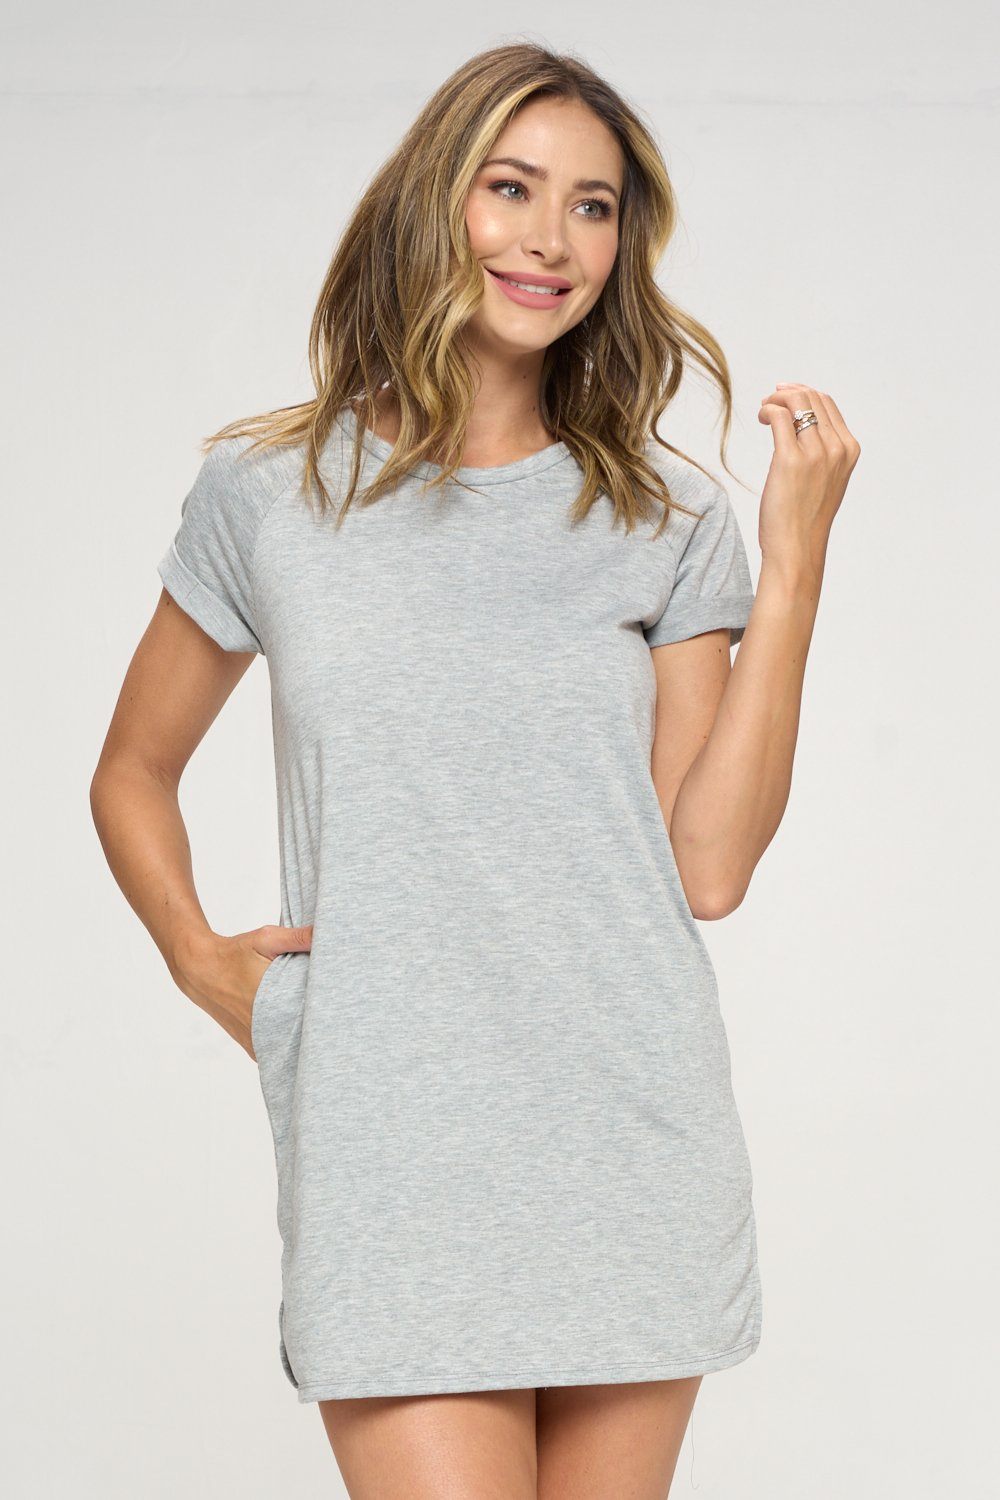 Desi - Heather Grey T-Shirt Dress by EVCR